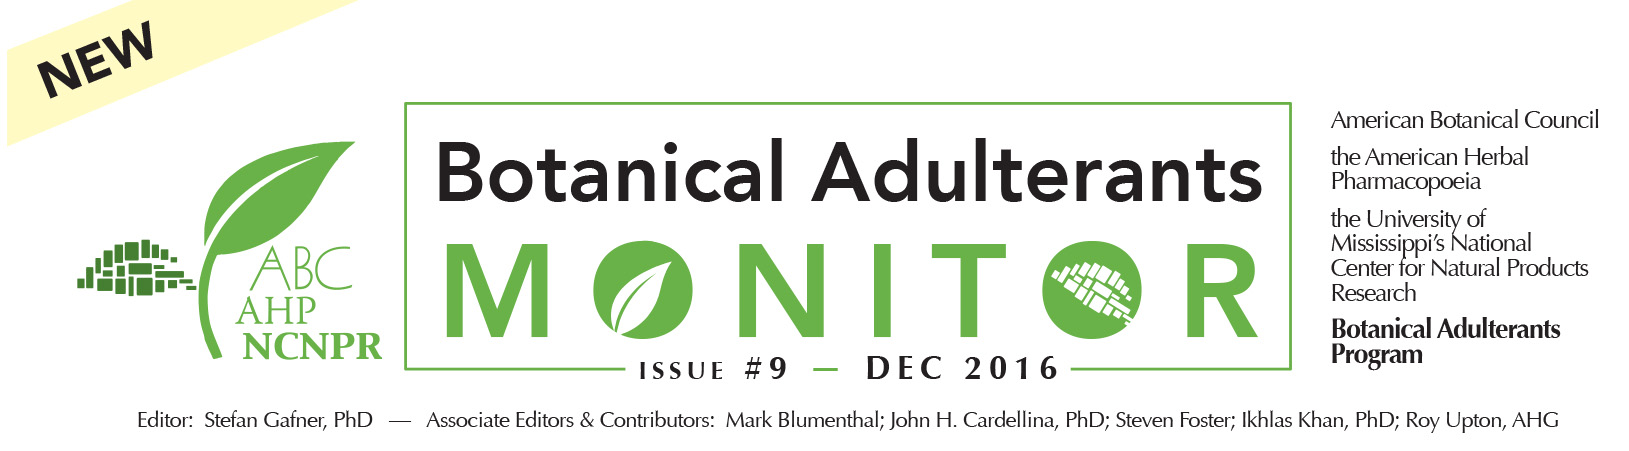 Botanical Adulterants Monitor Issue 9